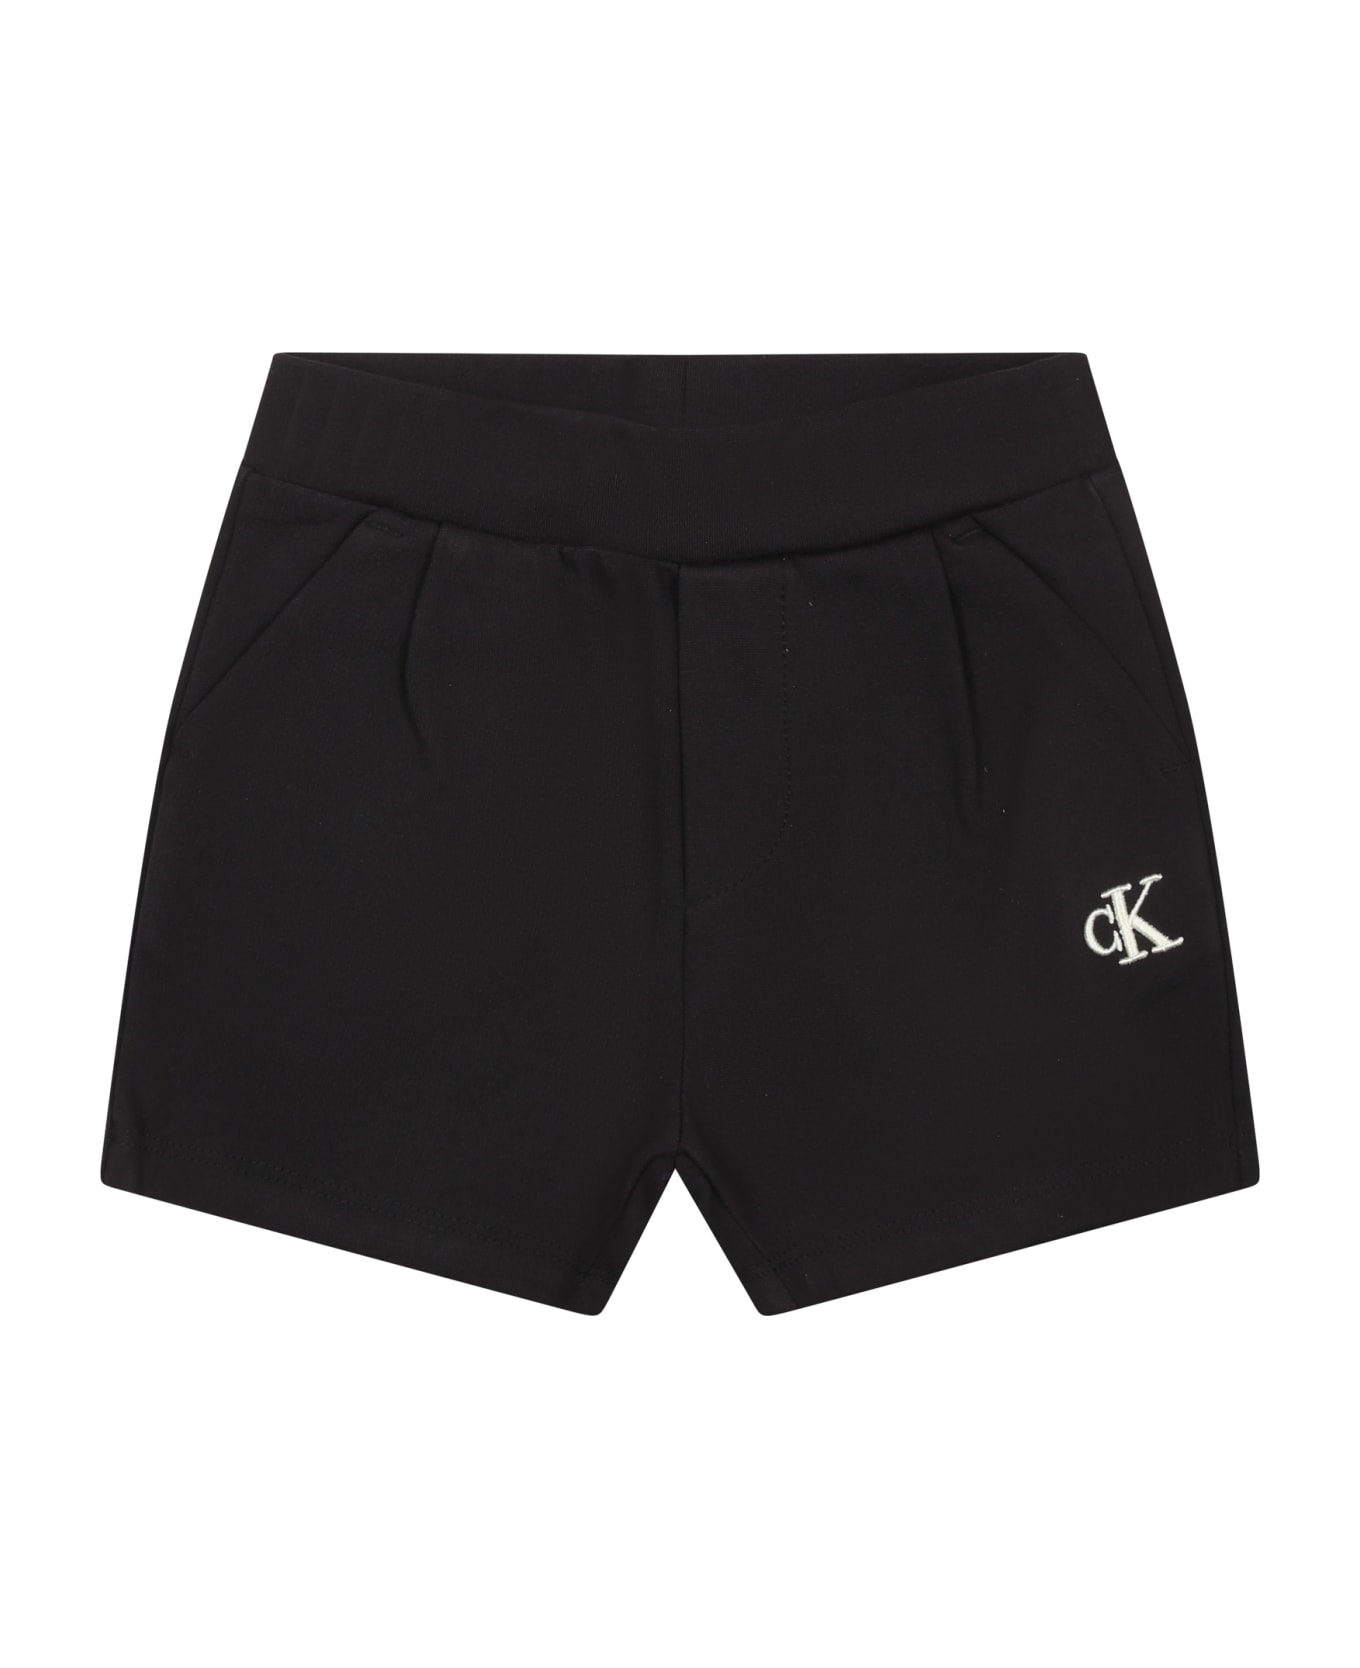 Calvin Klein Black Sports Shorts For Baby Boy With Logo - Black